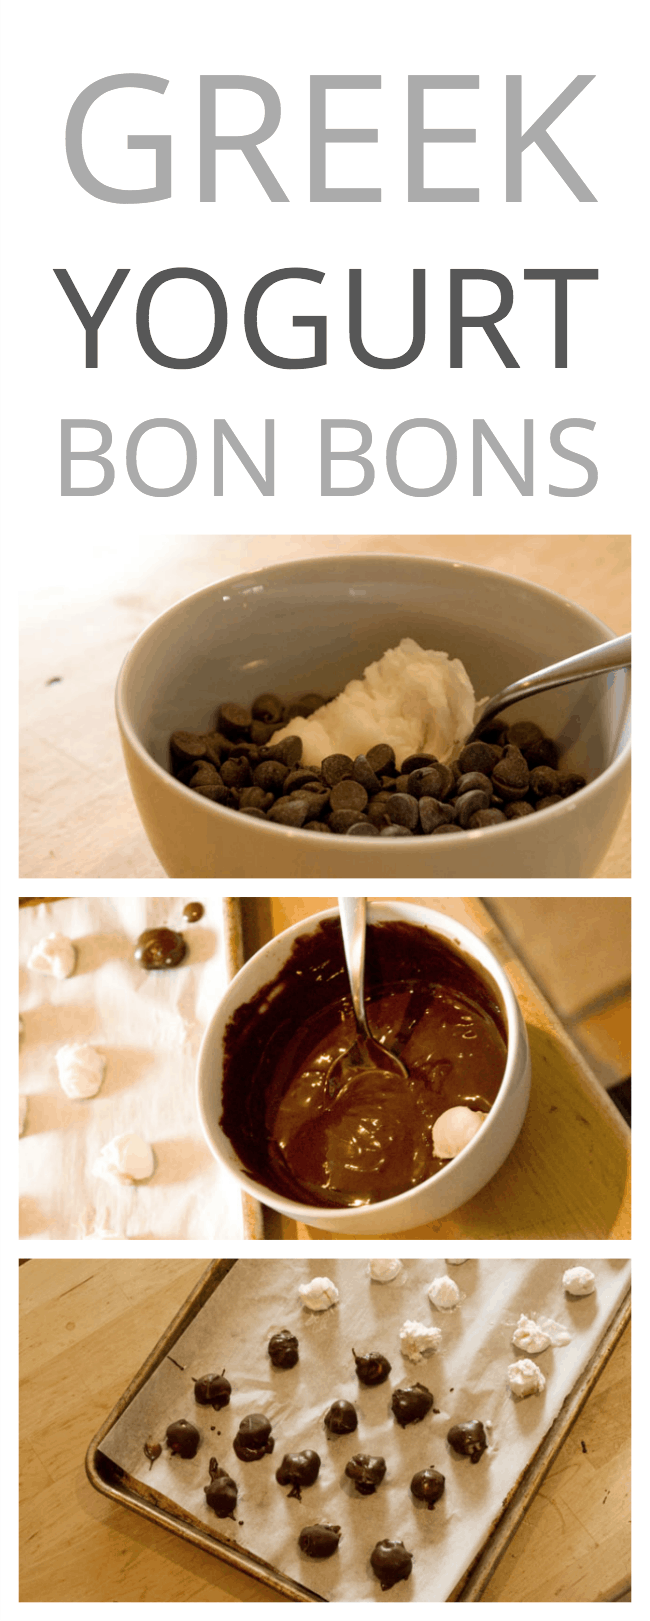 Greek yogurt bon bons recipe for a healthier movie time snack